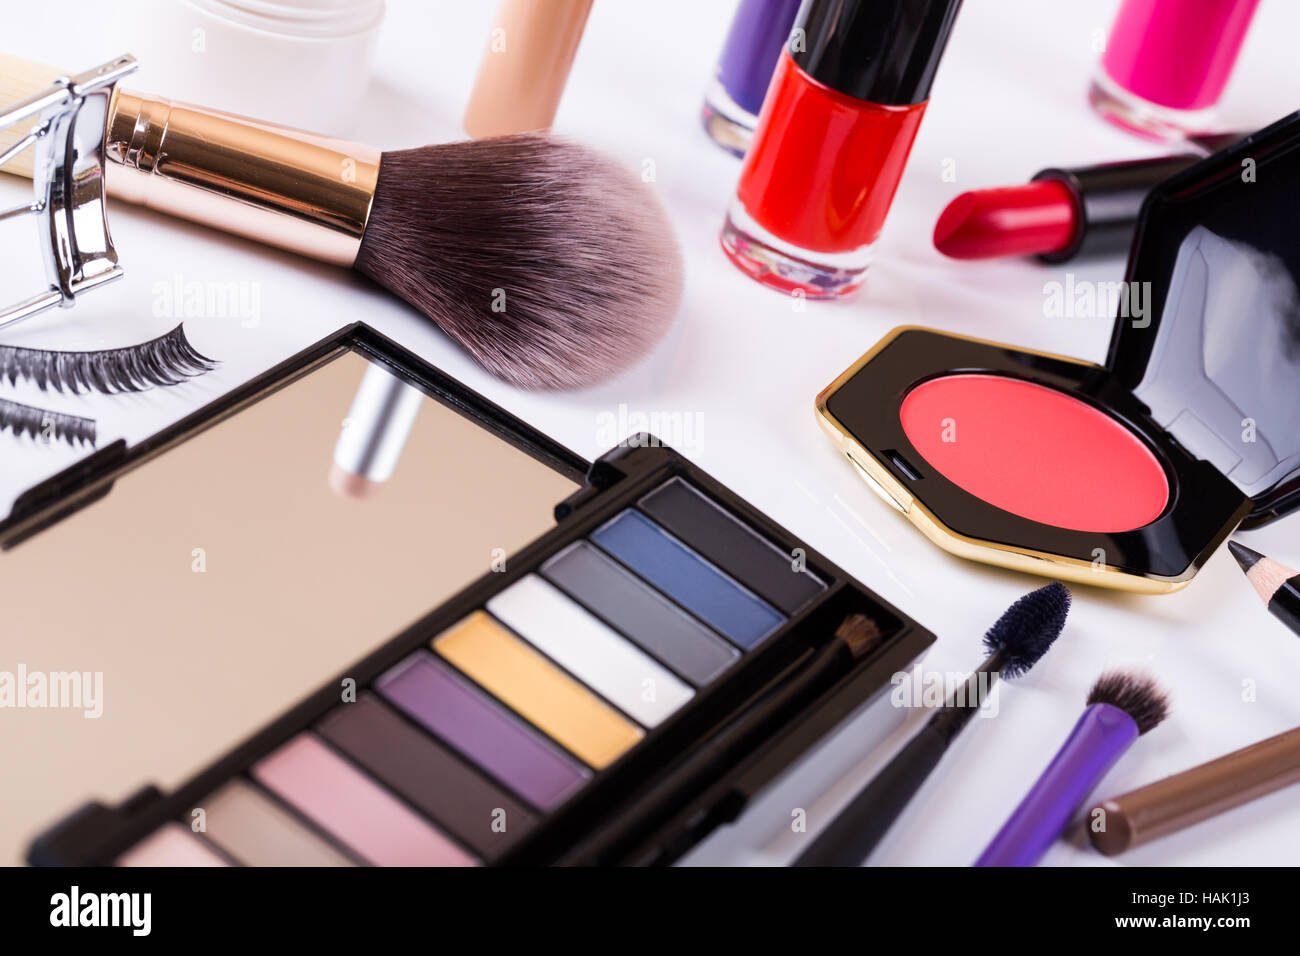 variety of makeup cosmetics Stock Photo